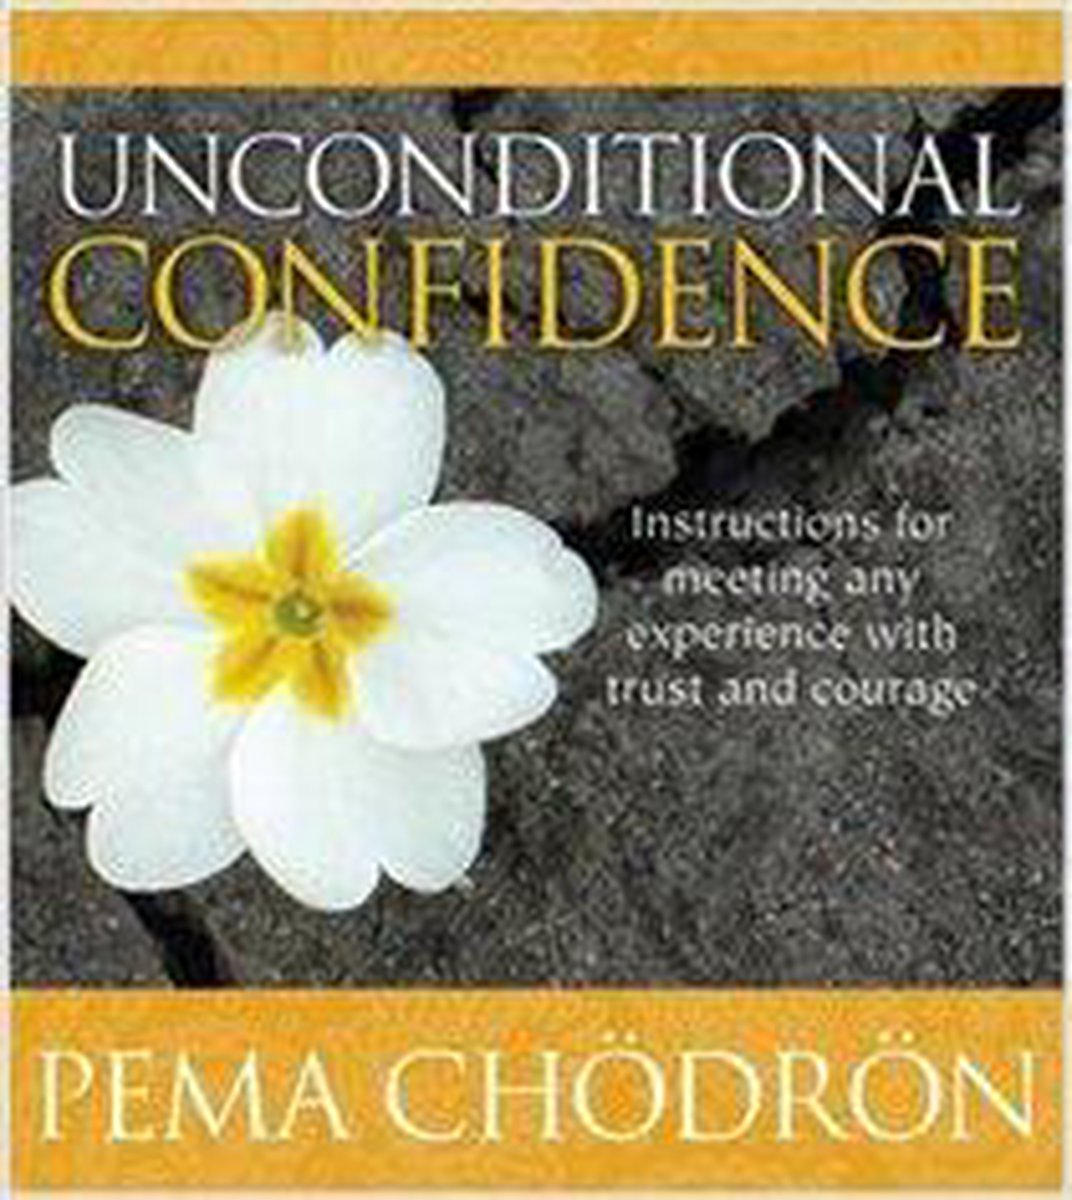 Unconditional Confidence - Pema Chodron